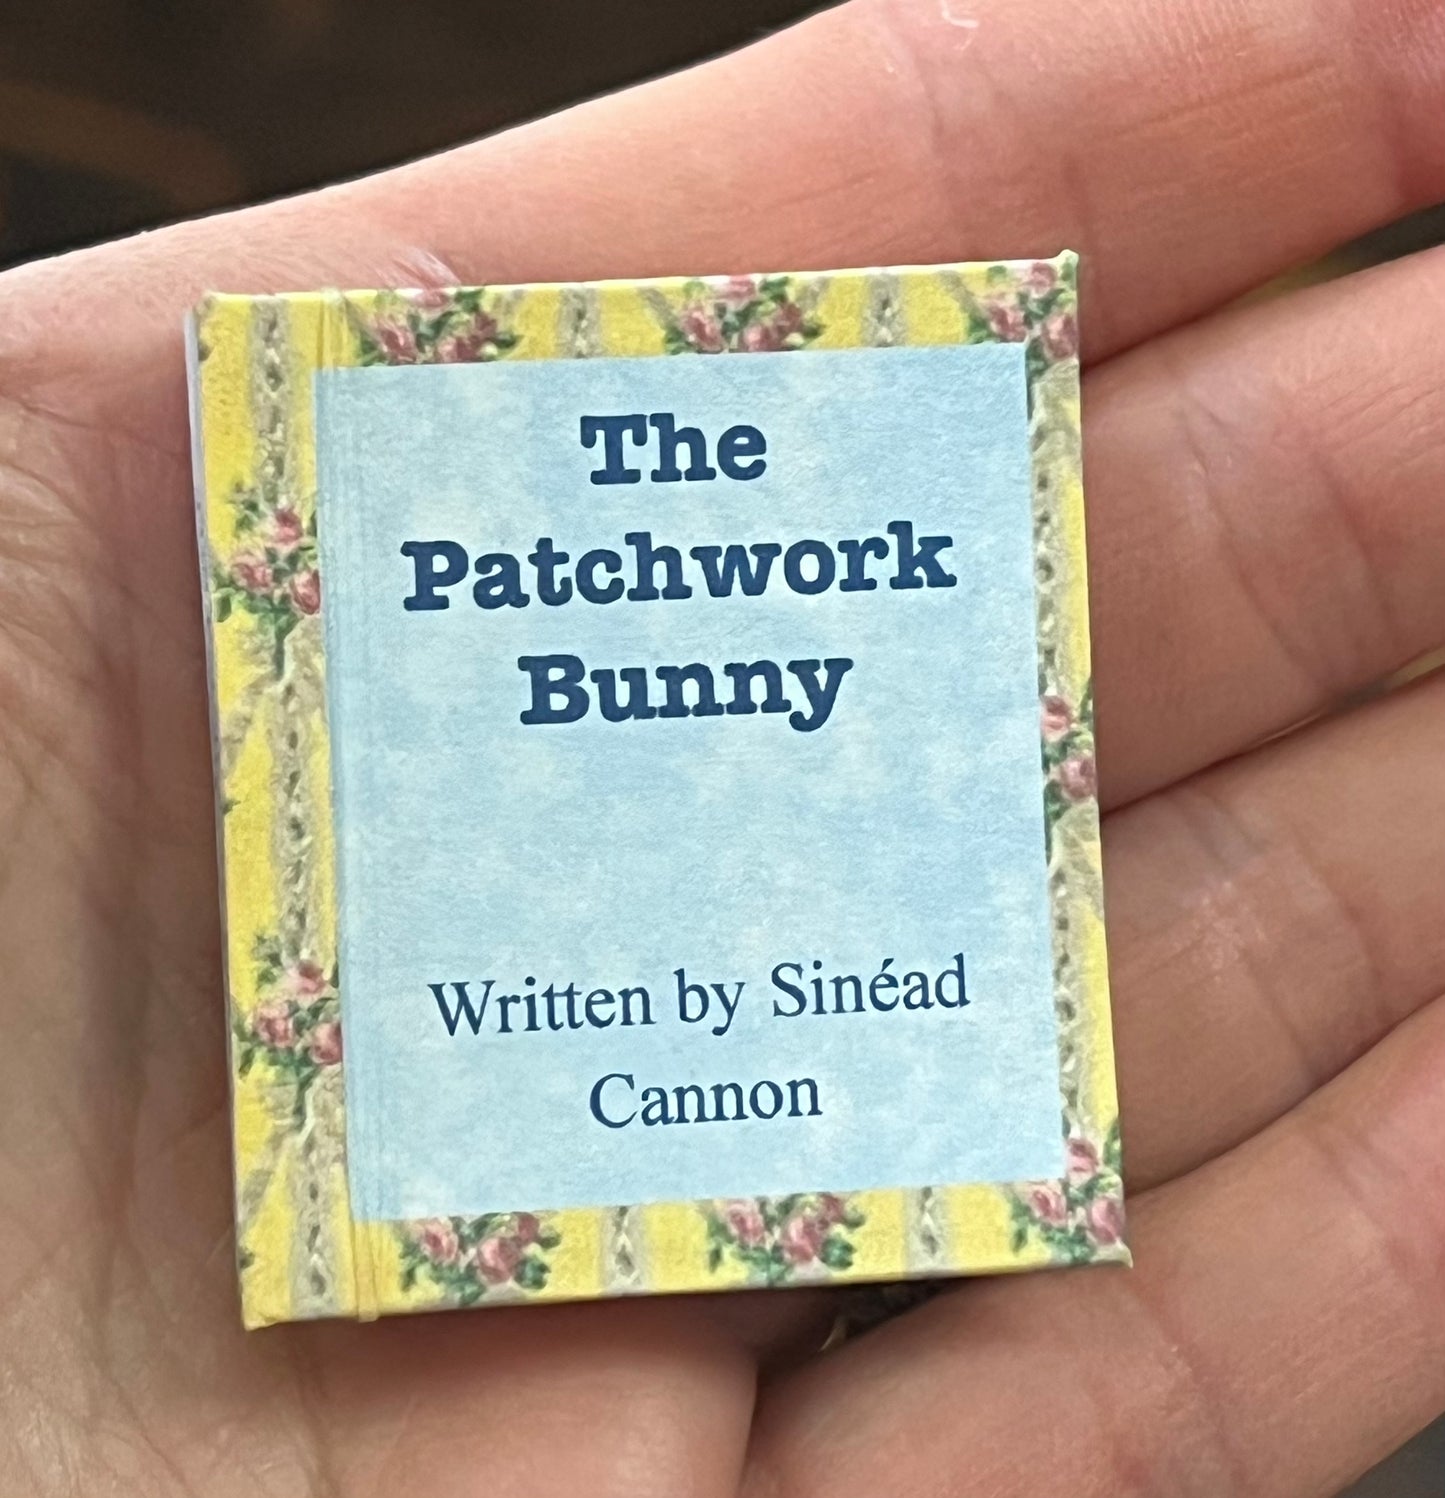 PDF Miniature Book "The Patchwork Bunny"